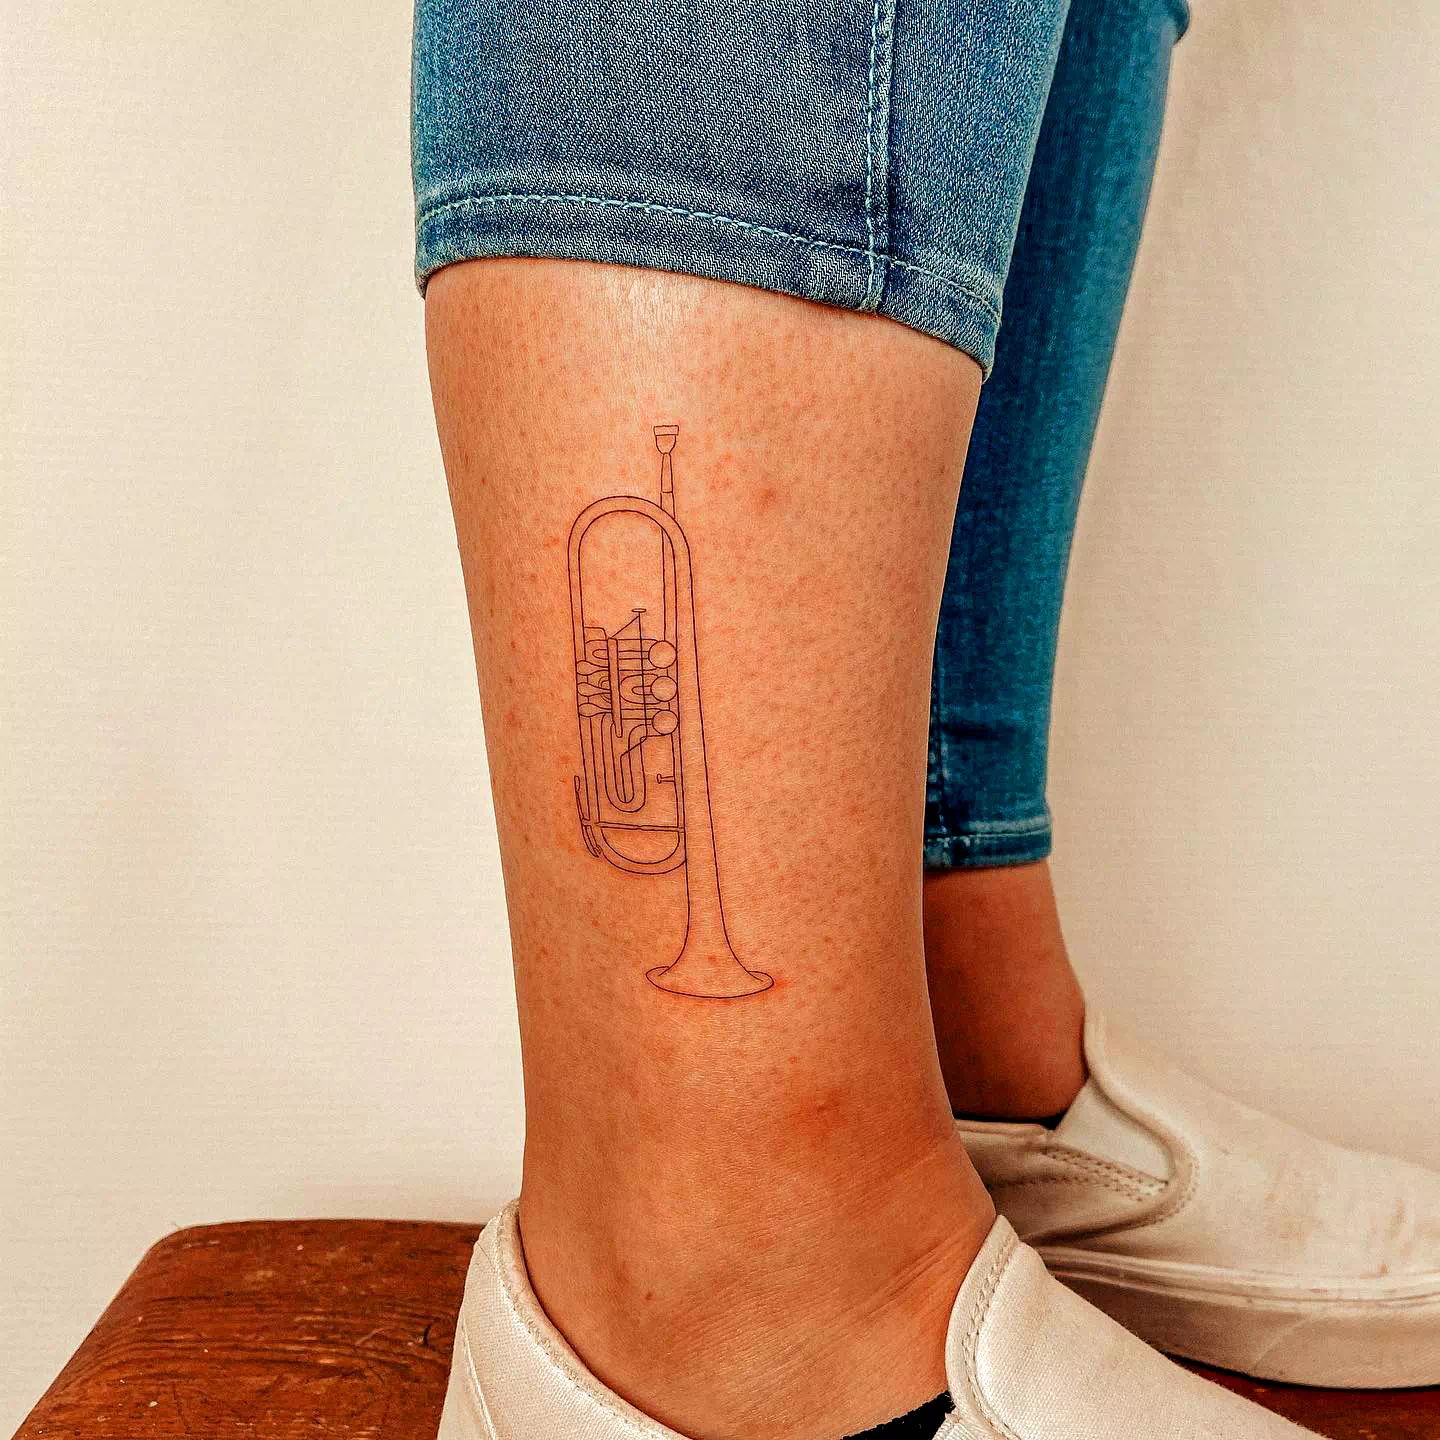 Tatuaje de trompeta 2